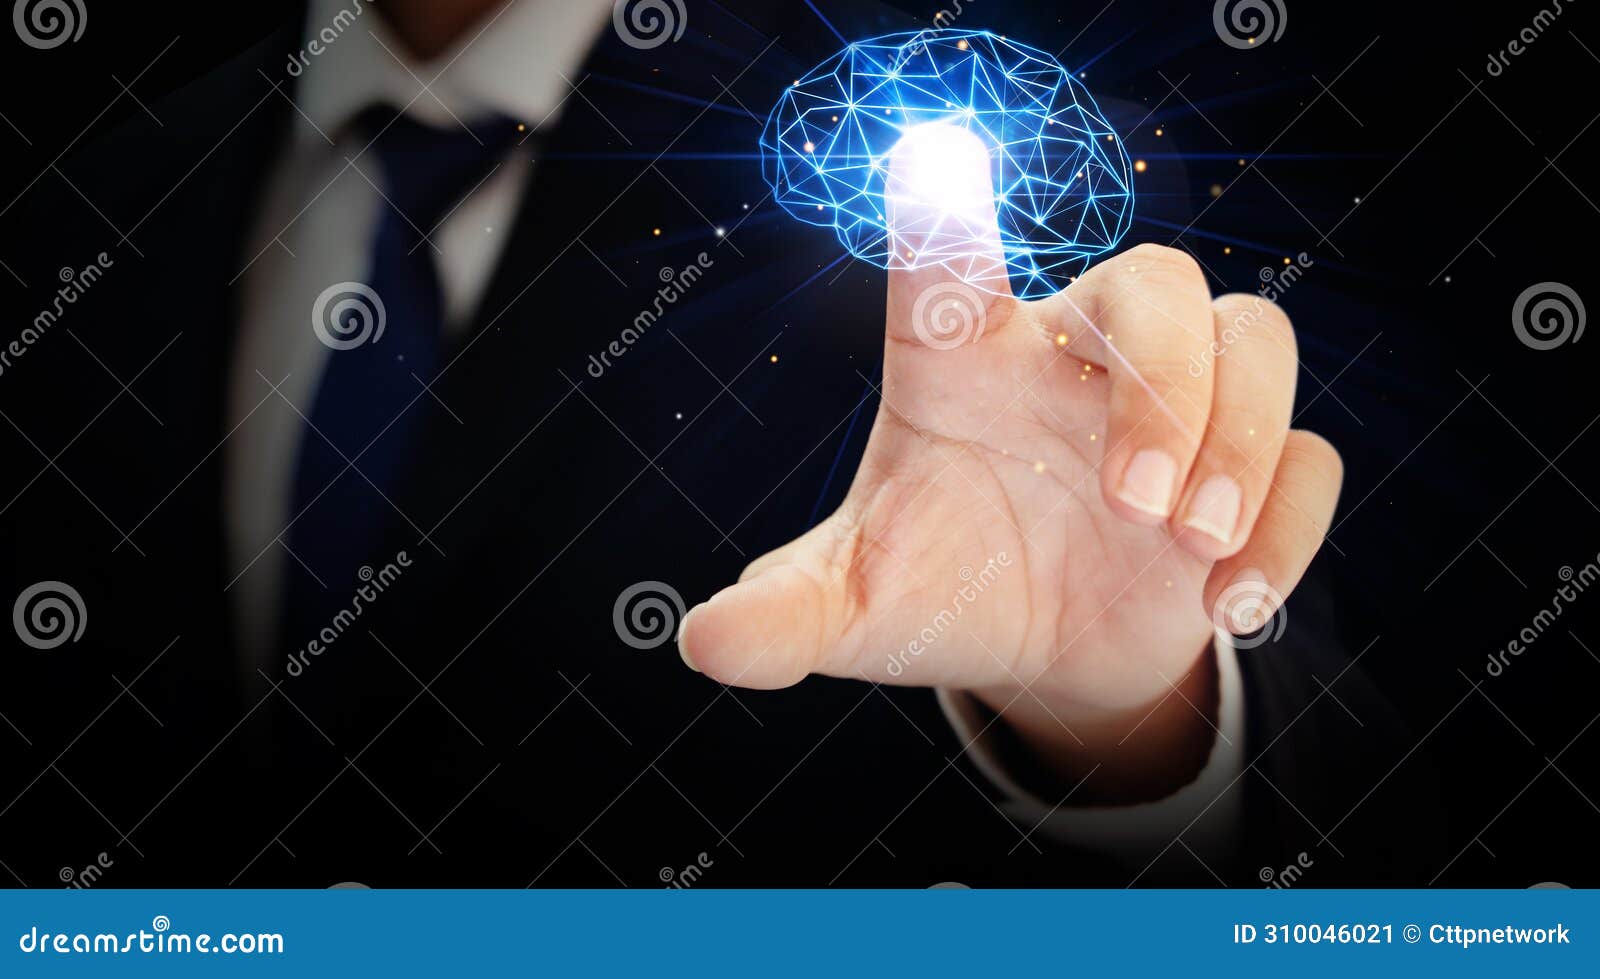 man touching glowing brain releasing energies concept background. modern brain touching energy backdrop,